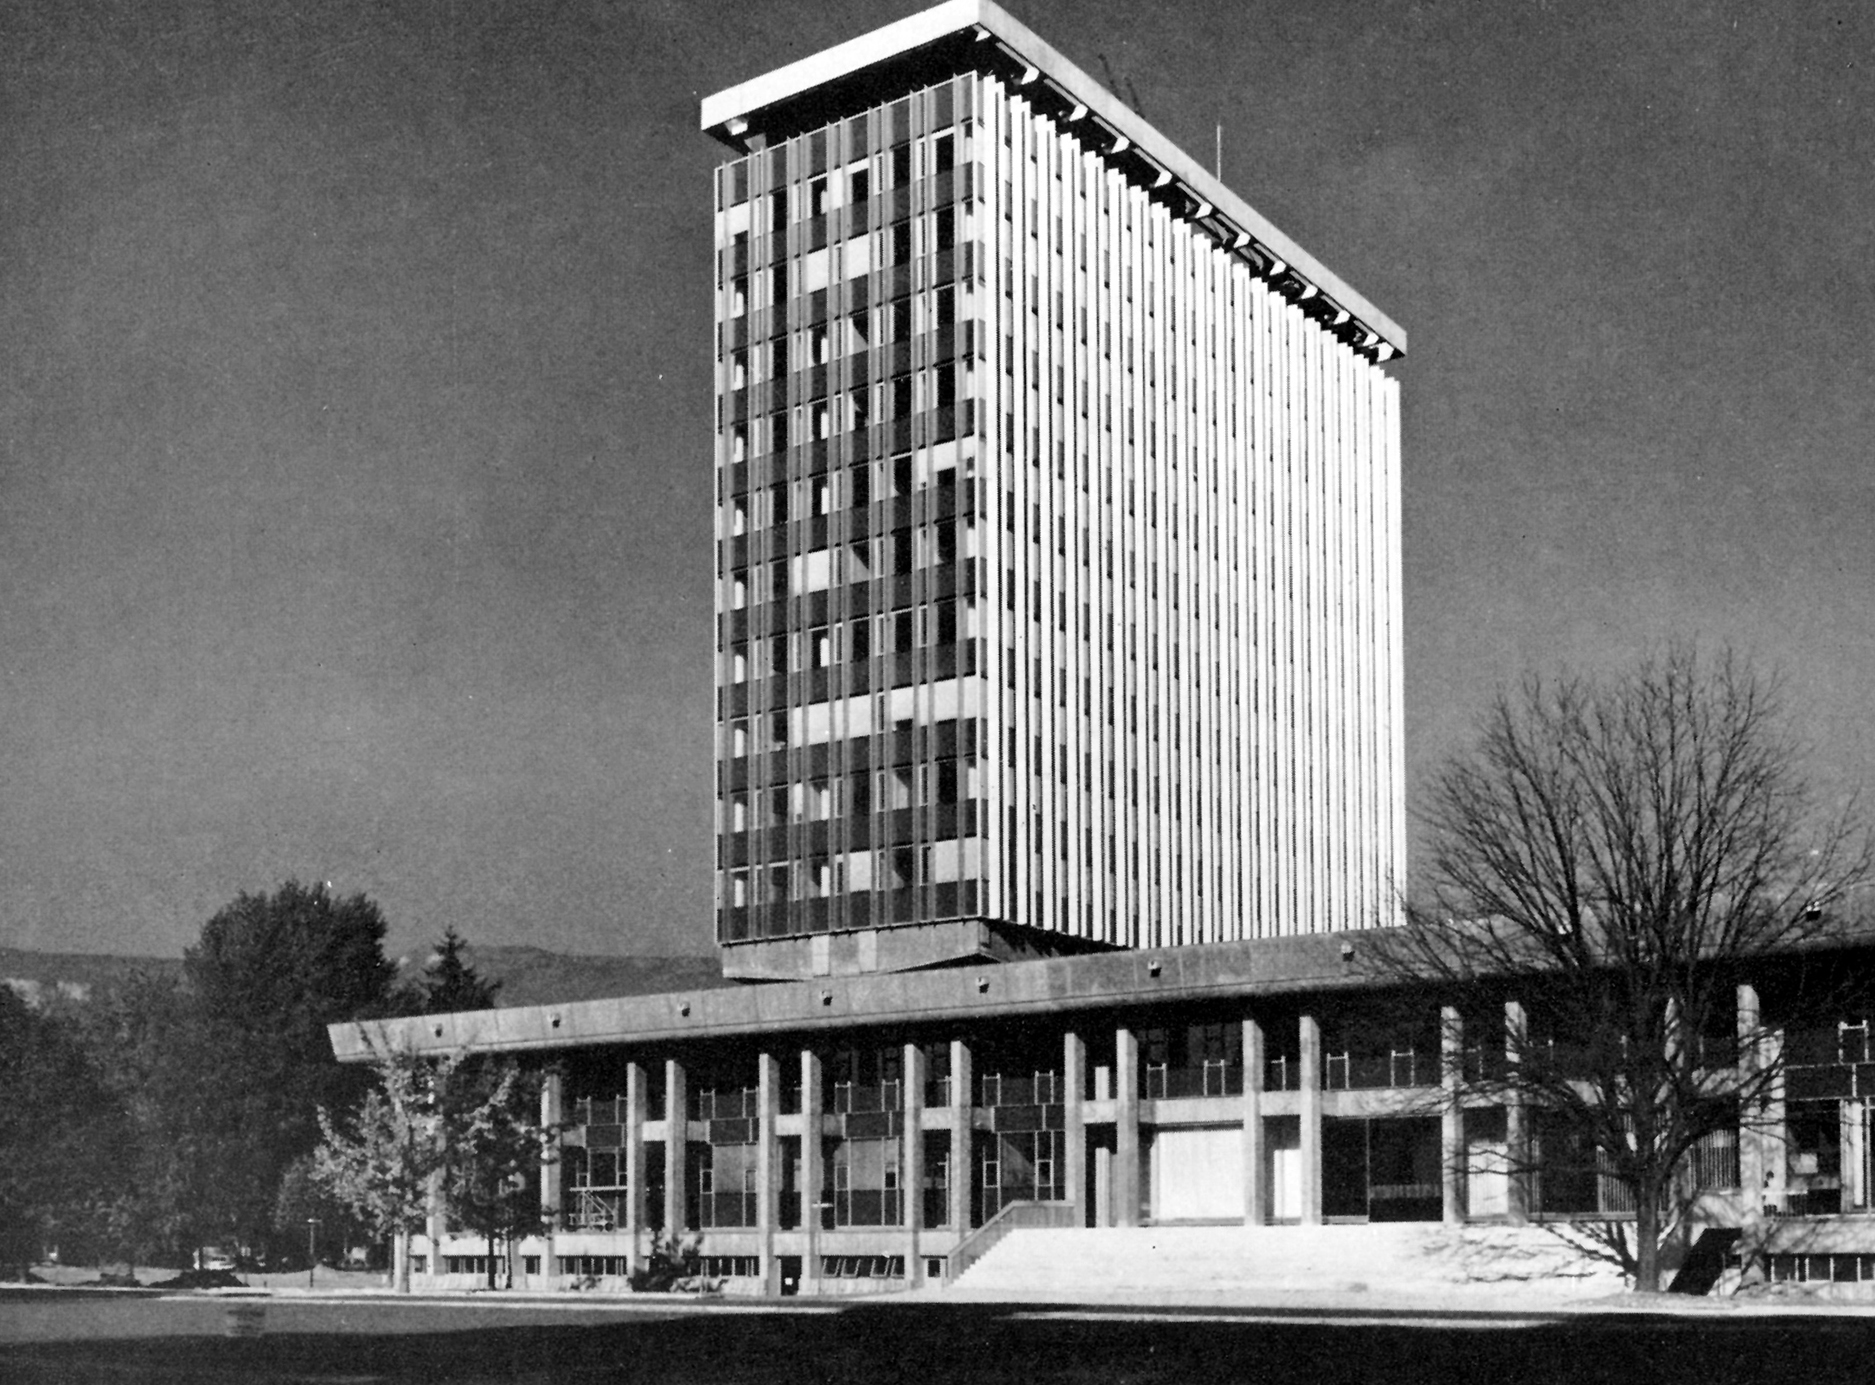 Town hall, Grenoble, 1968 (M. Novarina, architect). Facade CIMT Lorraine – Jean Prouvé.